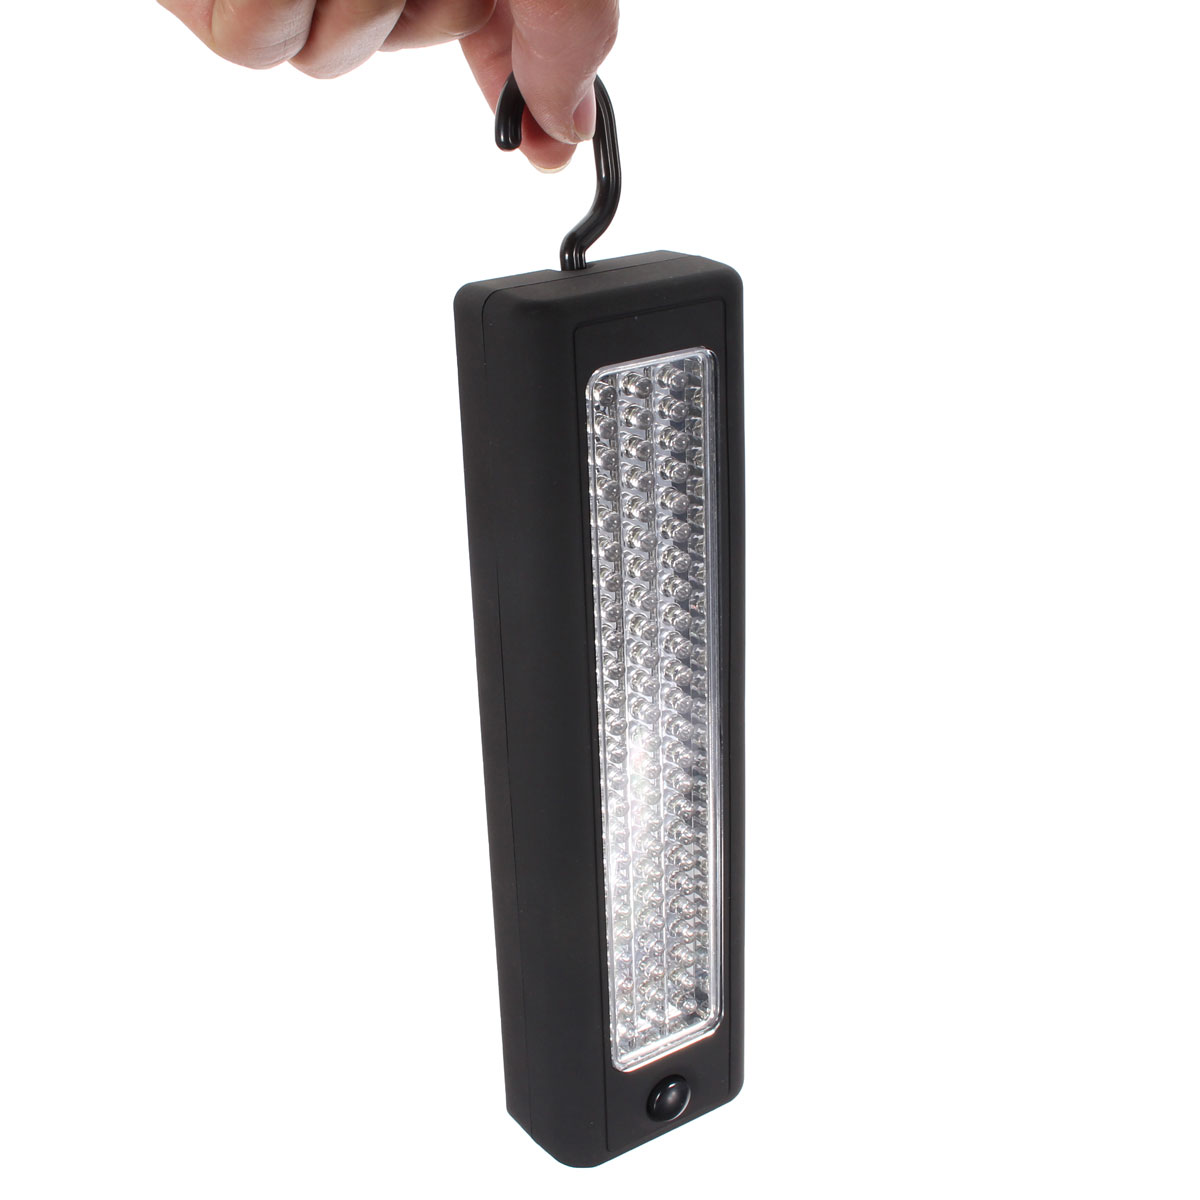 Portable-LED-Work-Light-Hook-Hanging-Emergency-Repair-Camping-Lamp-for-Garage-Outdoor-Travel-967012